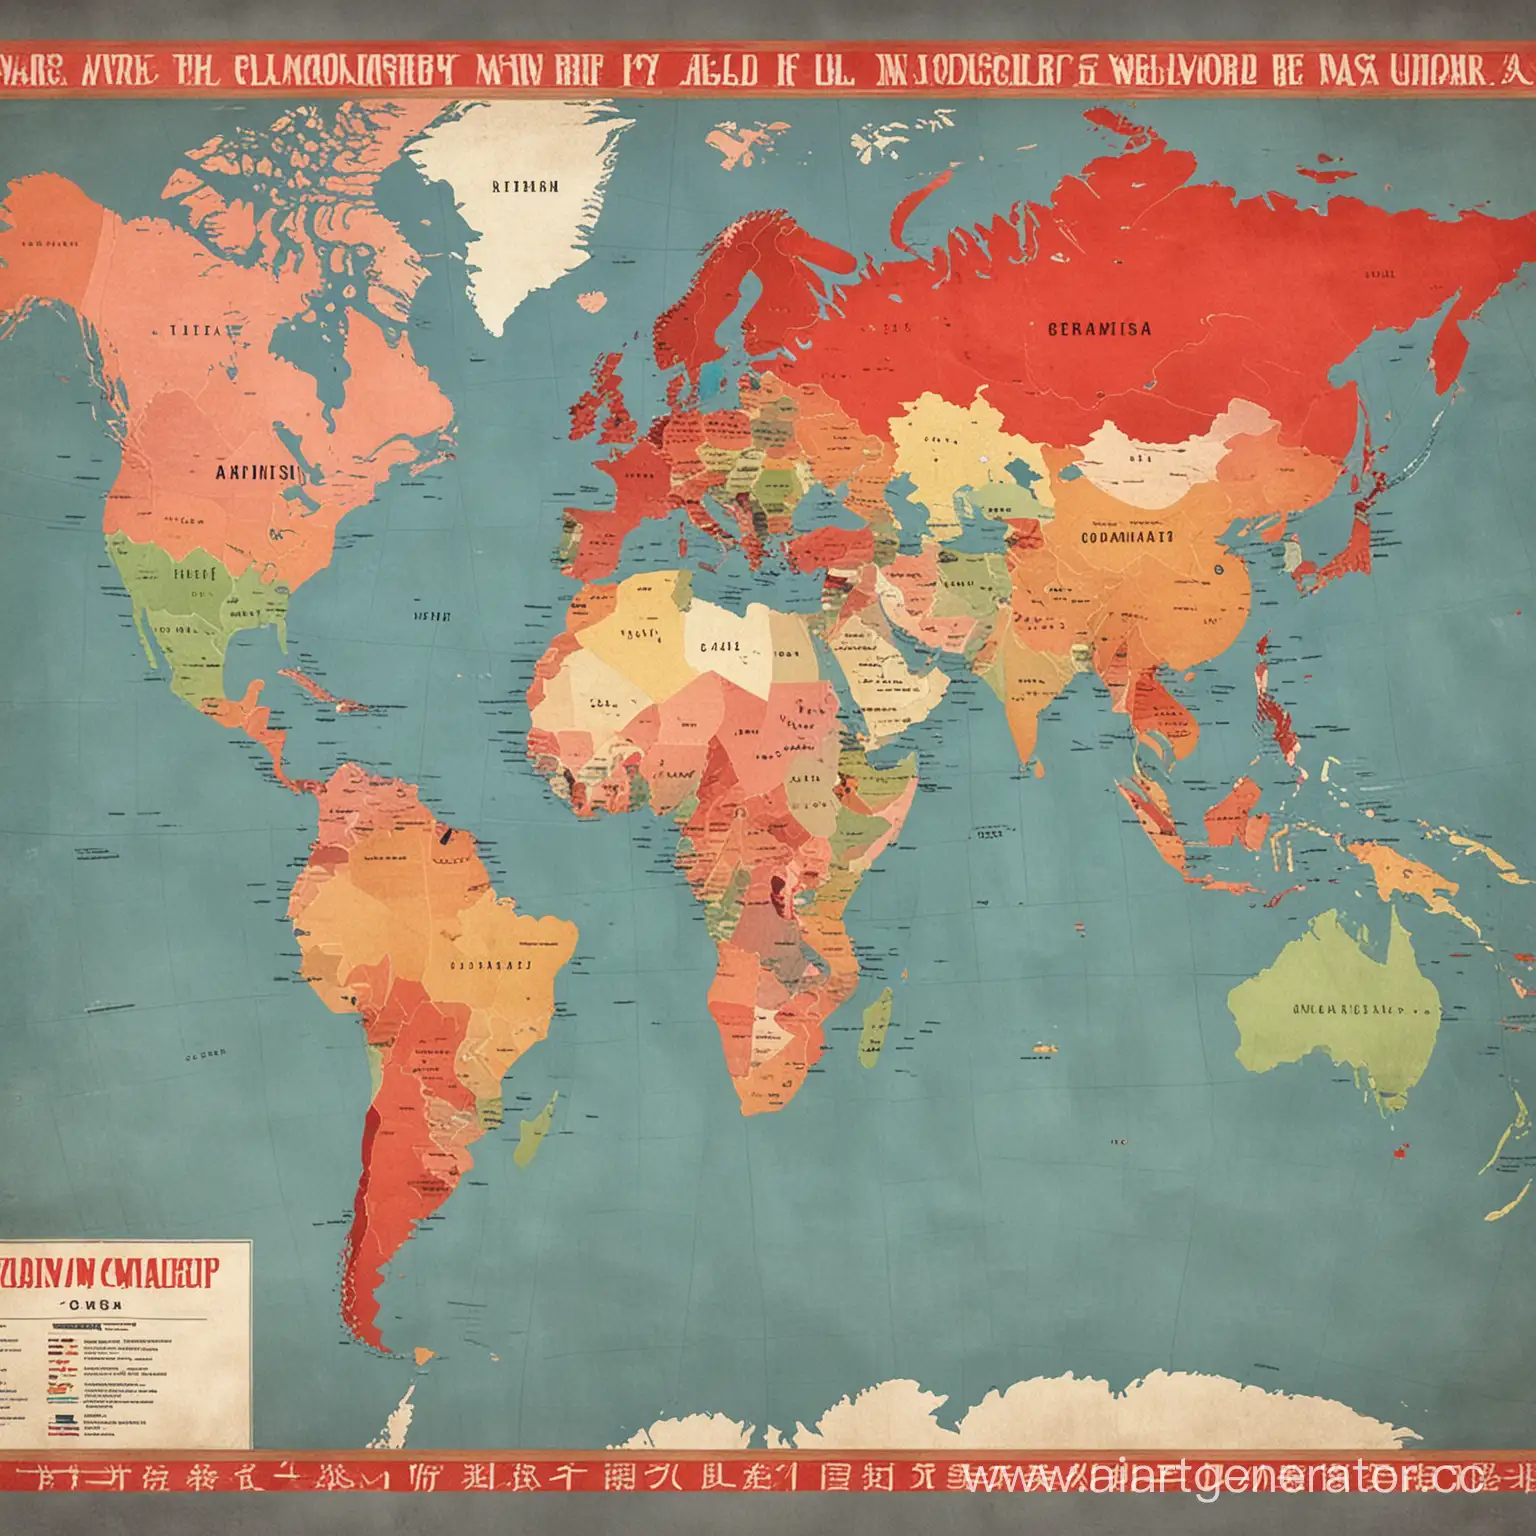 Imagining-a-Communist-World-A-Global-Map-Visualization